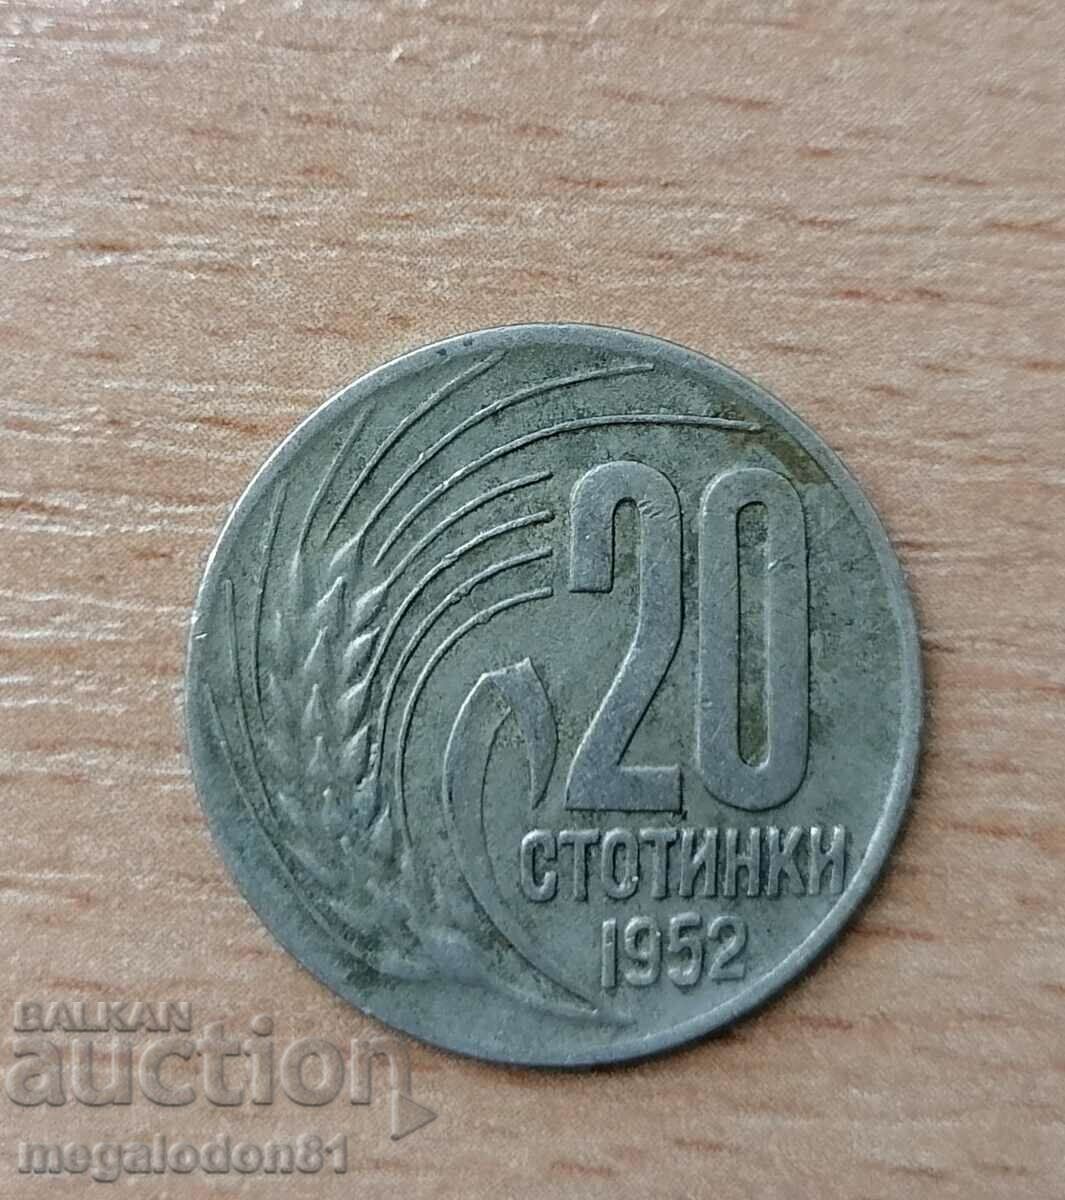 Bulgaria - 20 cents 1952